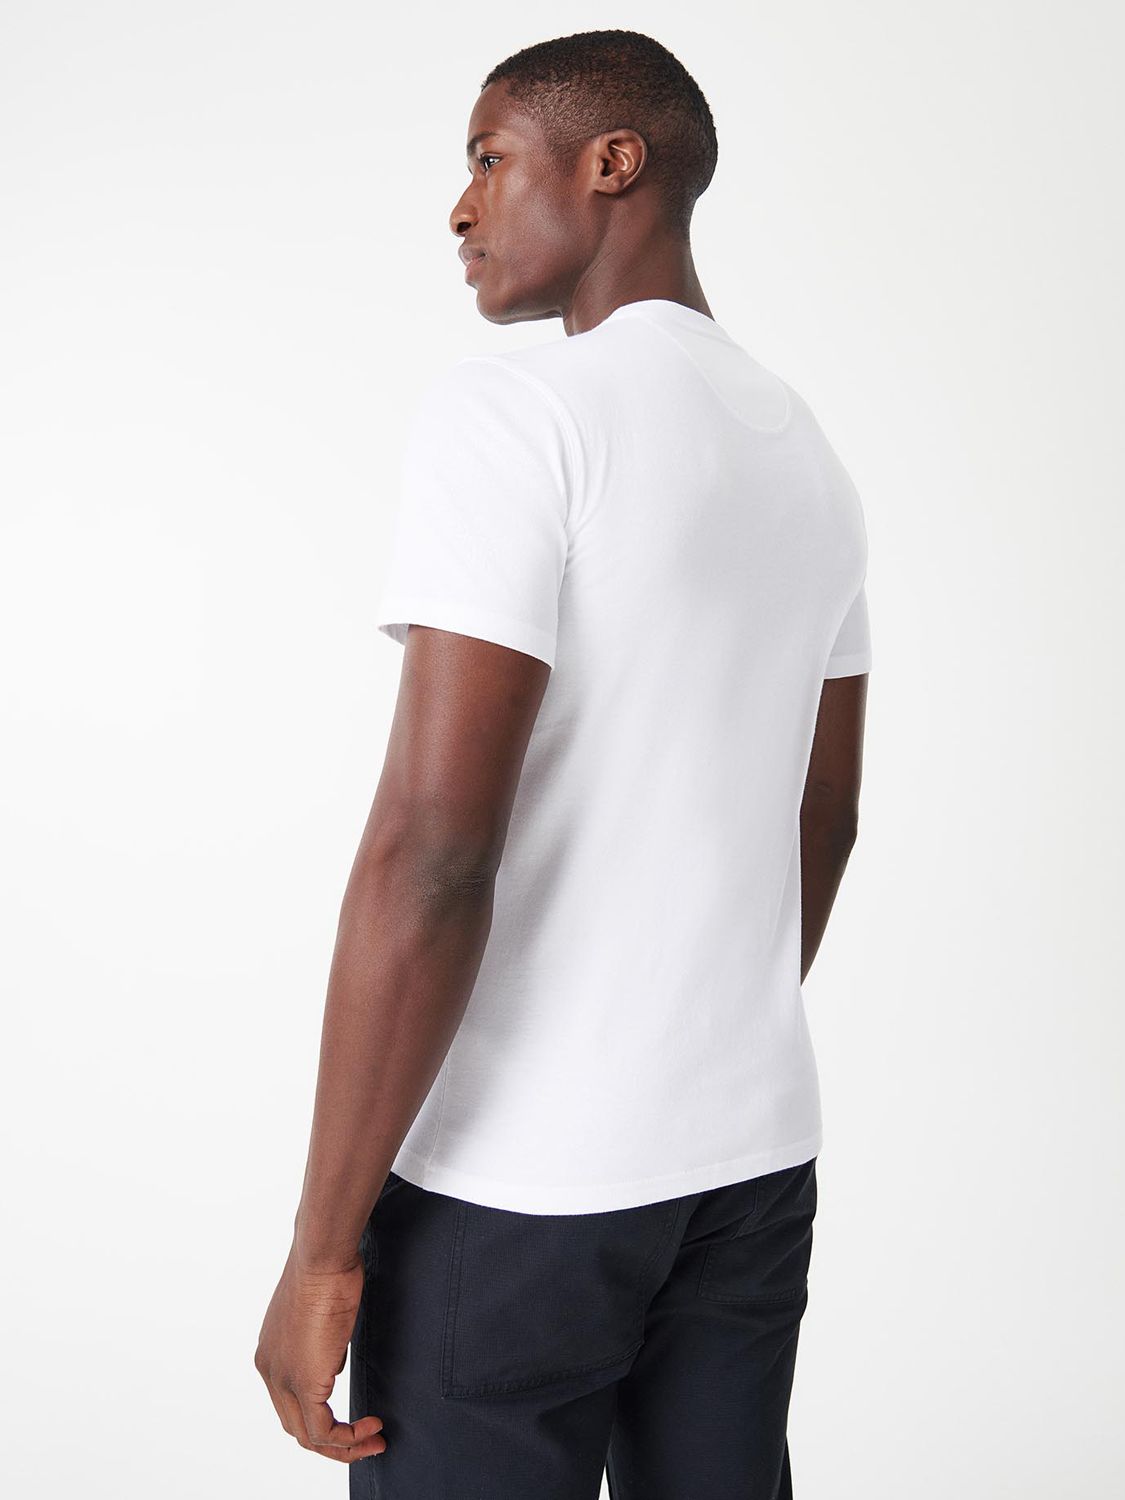 Barbour International Small Logo T-Shirt, White, XL